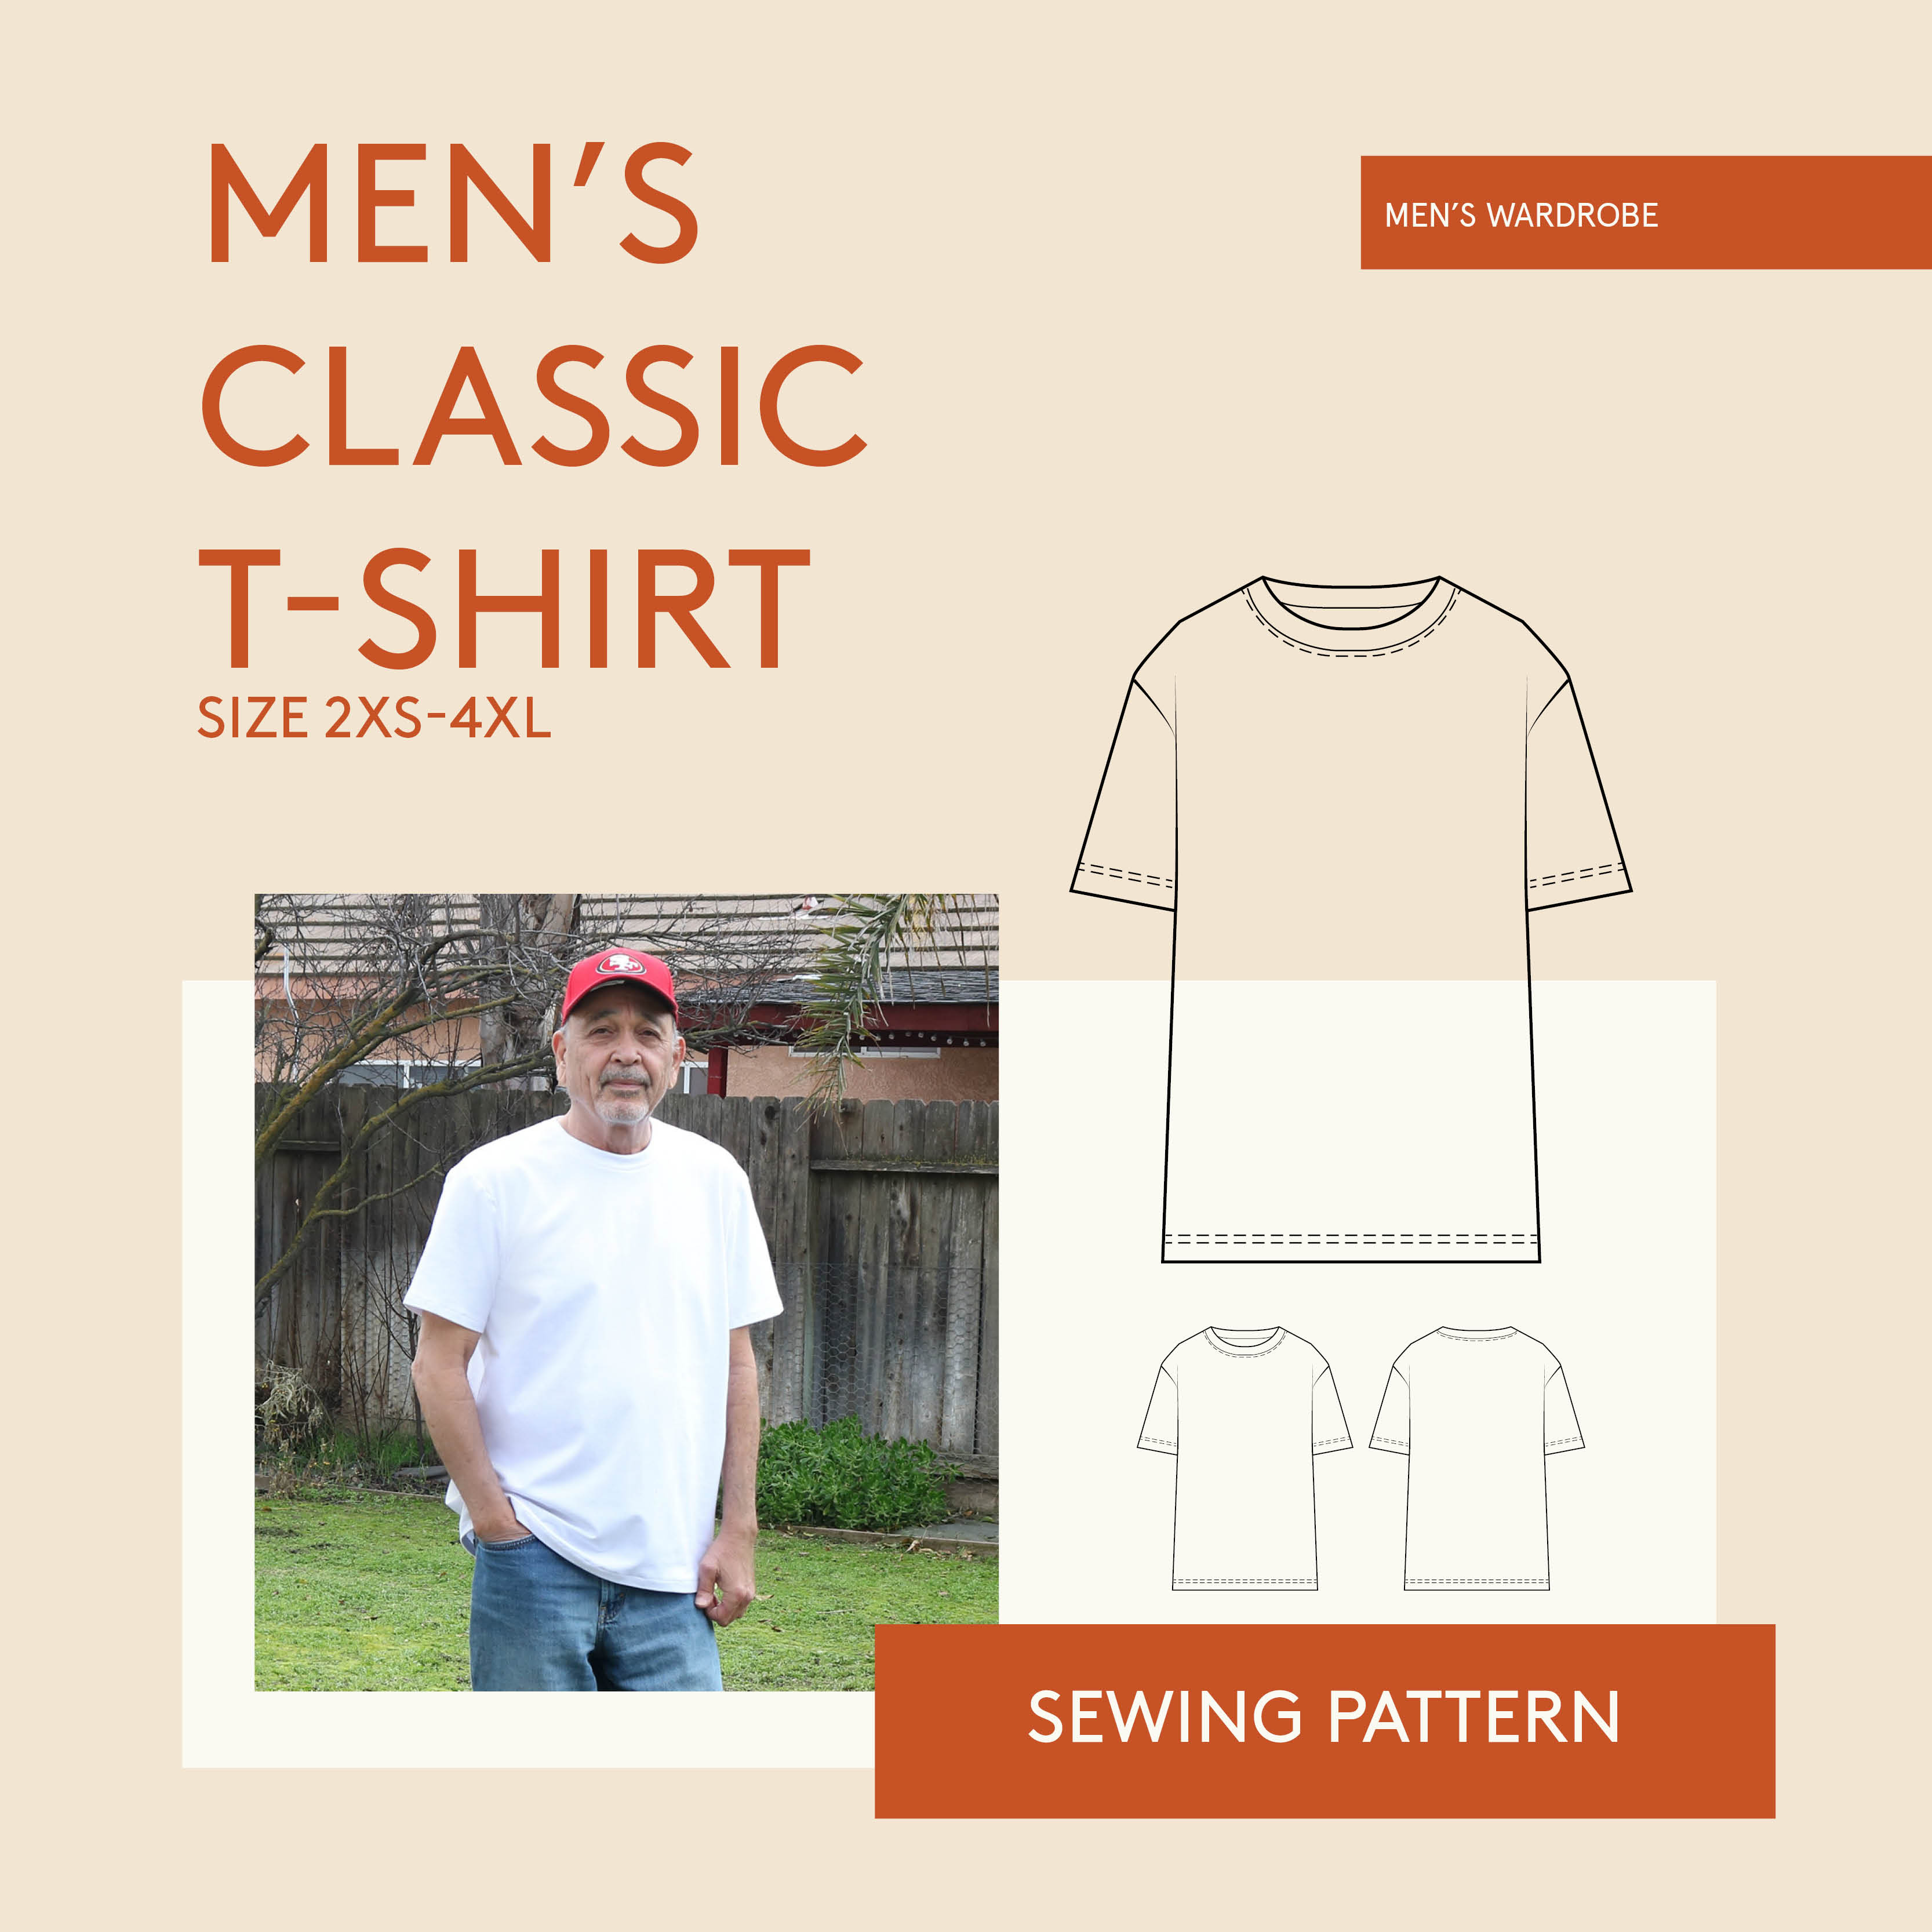 Wardrobe by Me Men's Classic T-shirt Downloadable Pattern